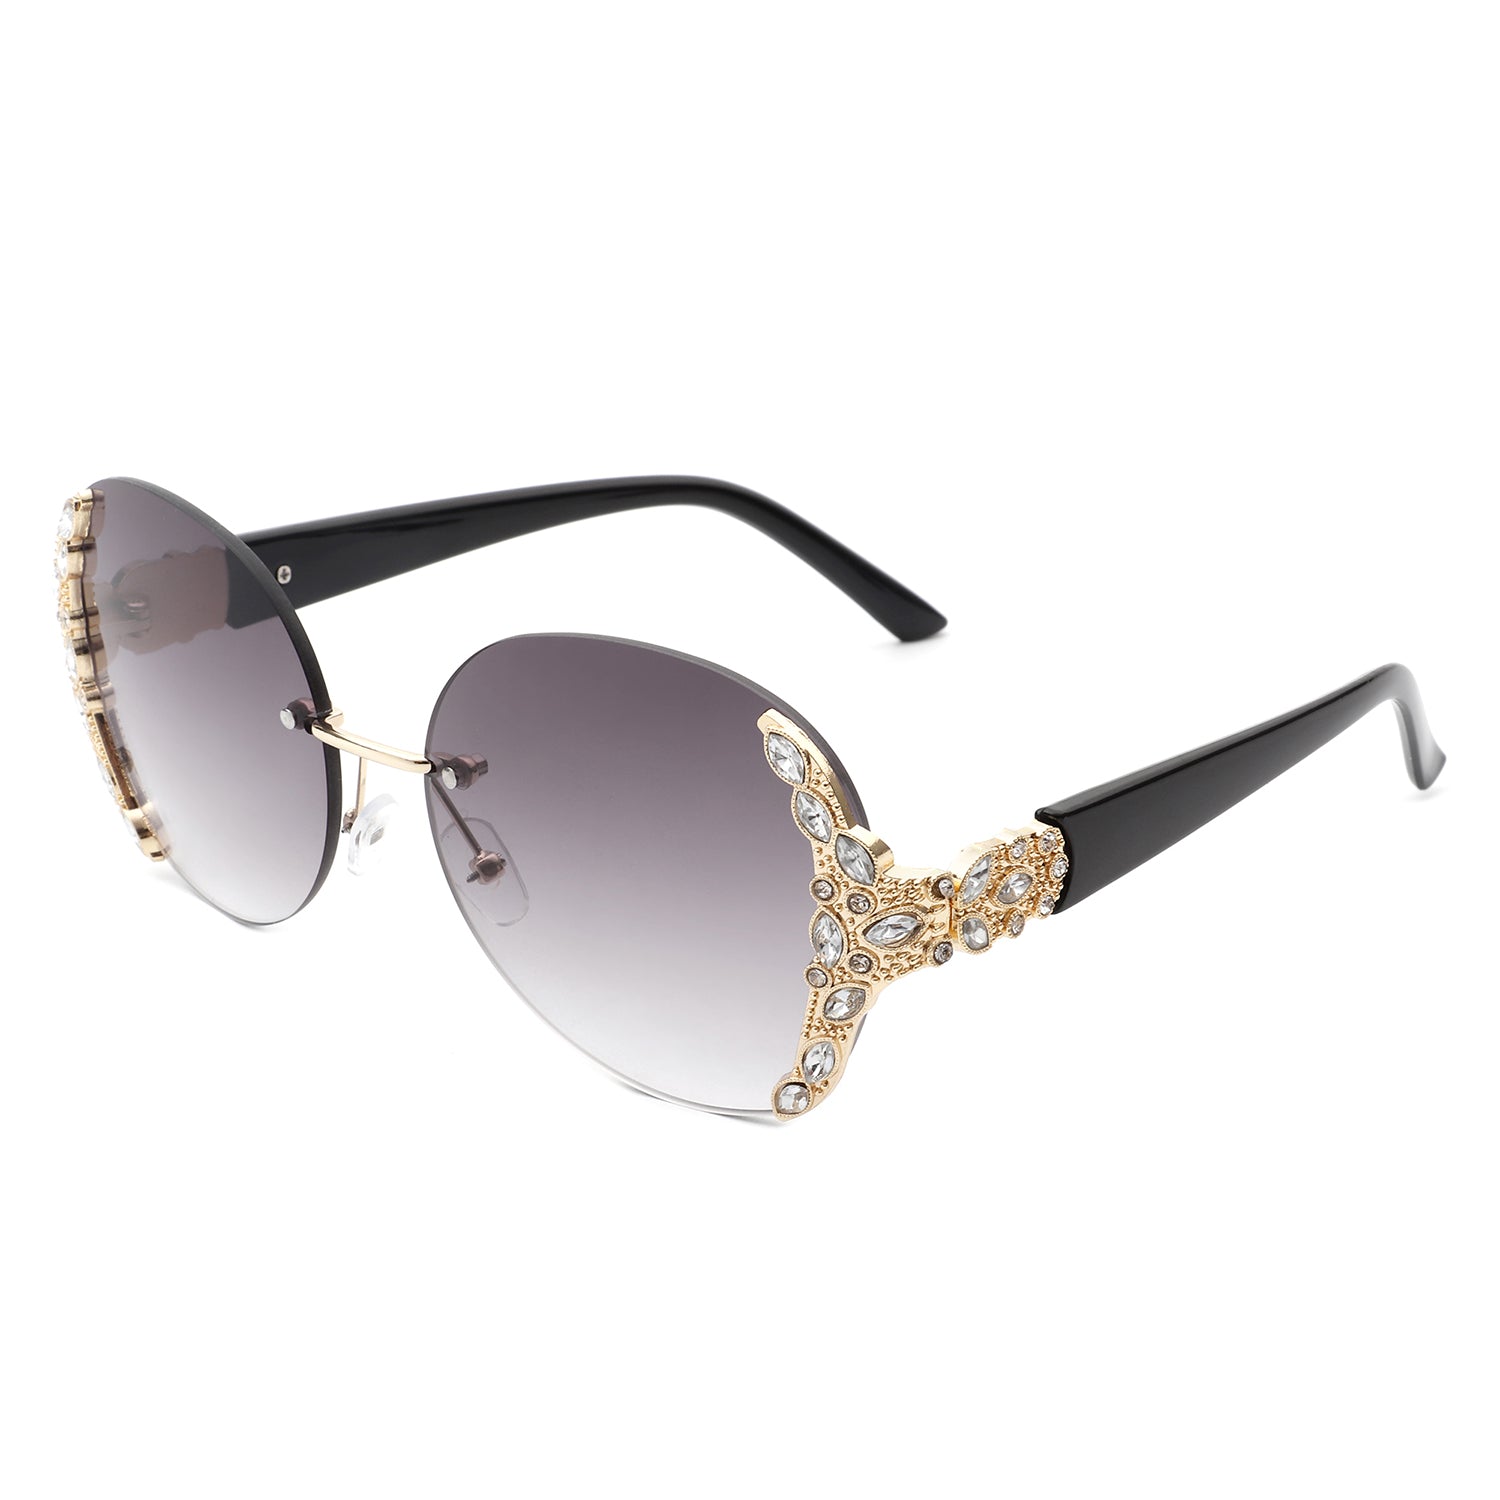 Jadeisle - Women Oval Rimless Rhinestone Design Round Oversize Sunglasses Gradient Purple